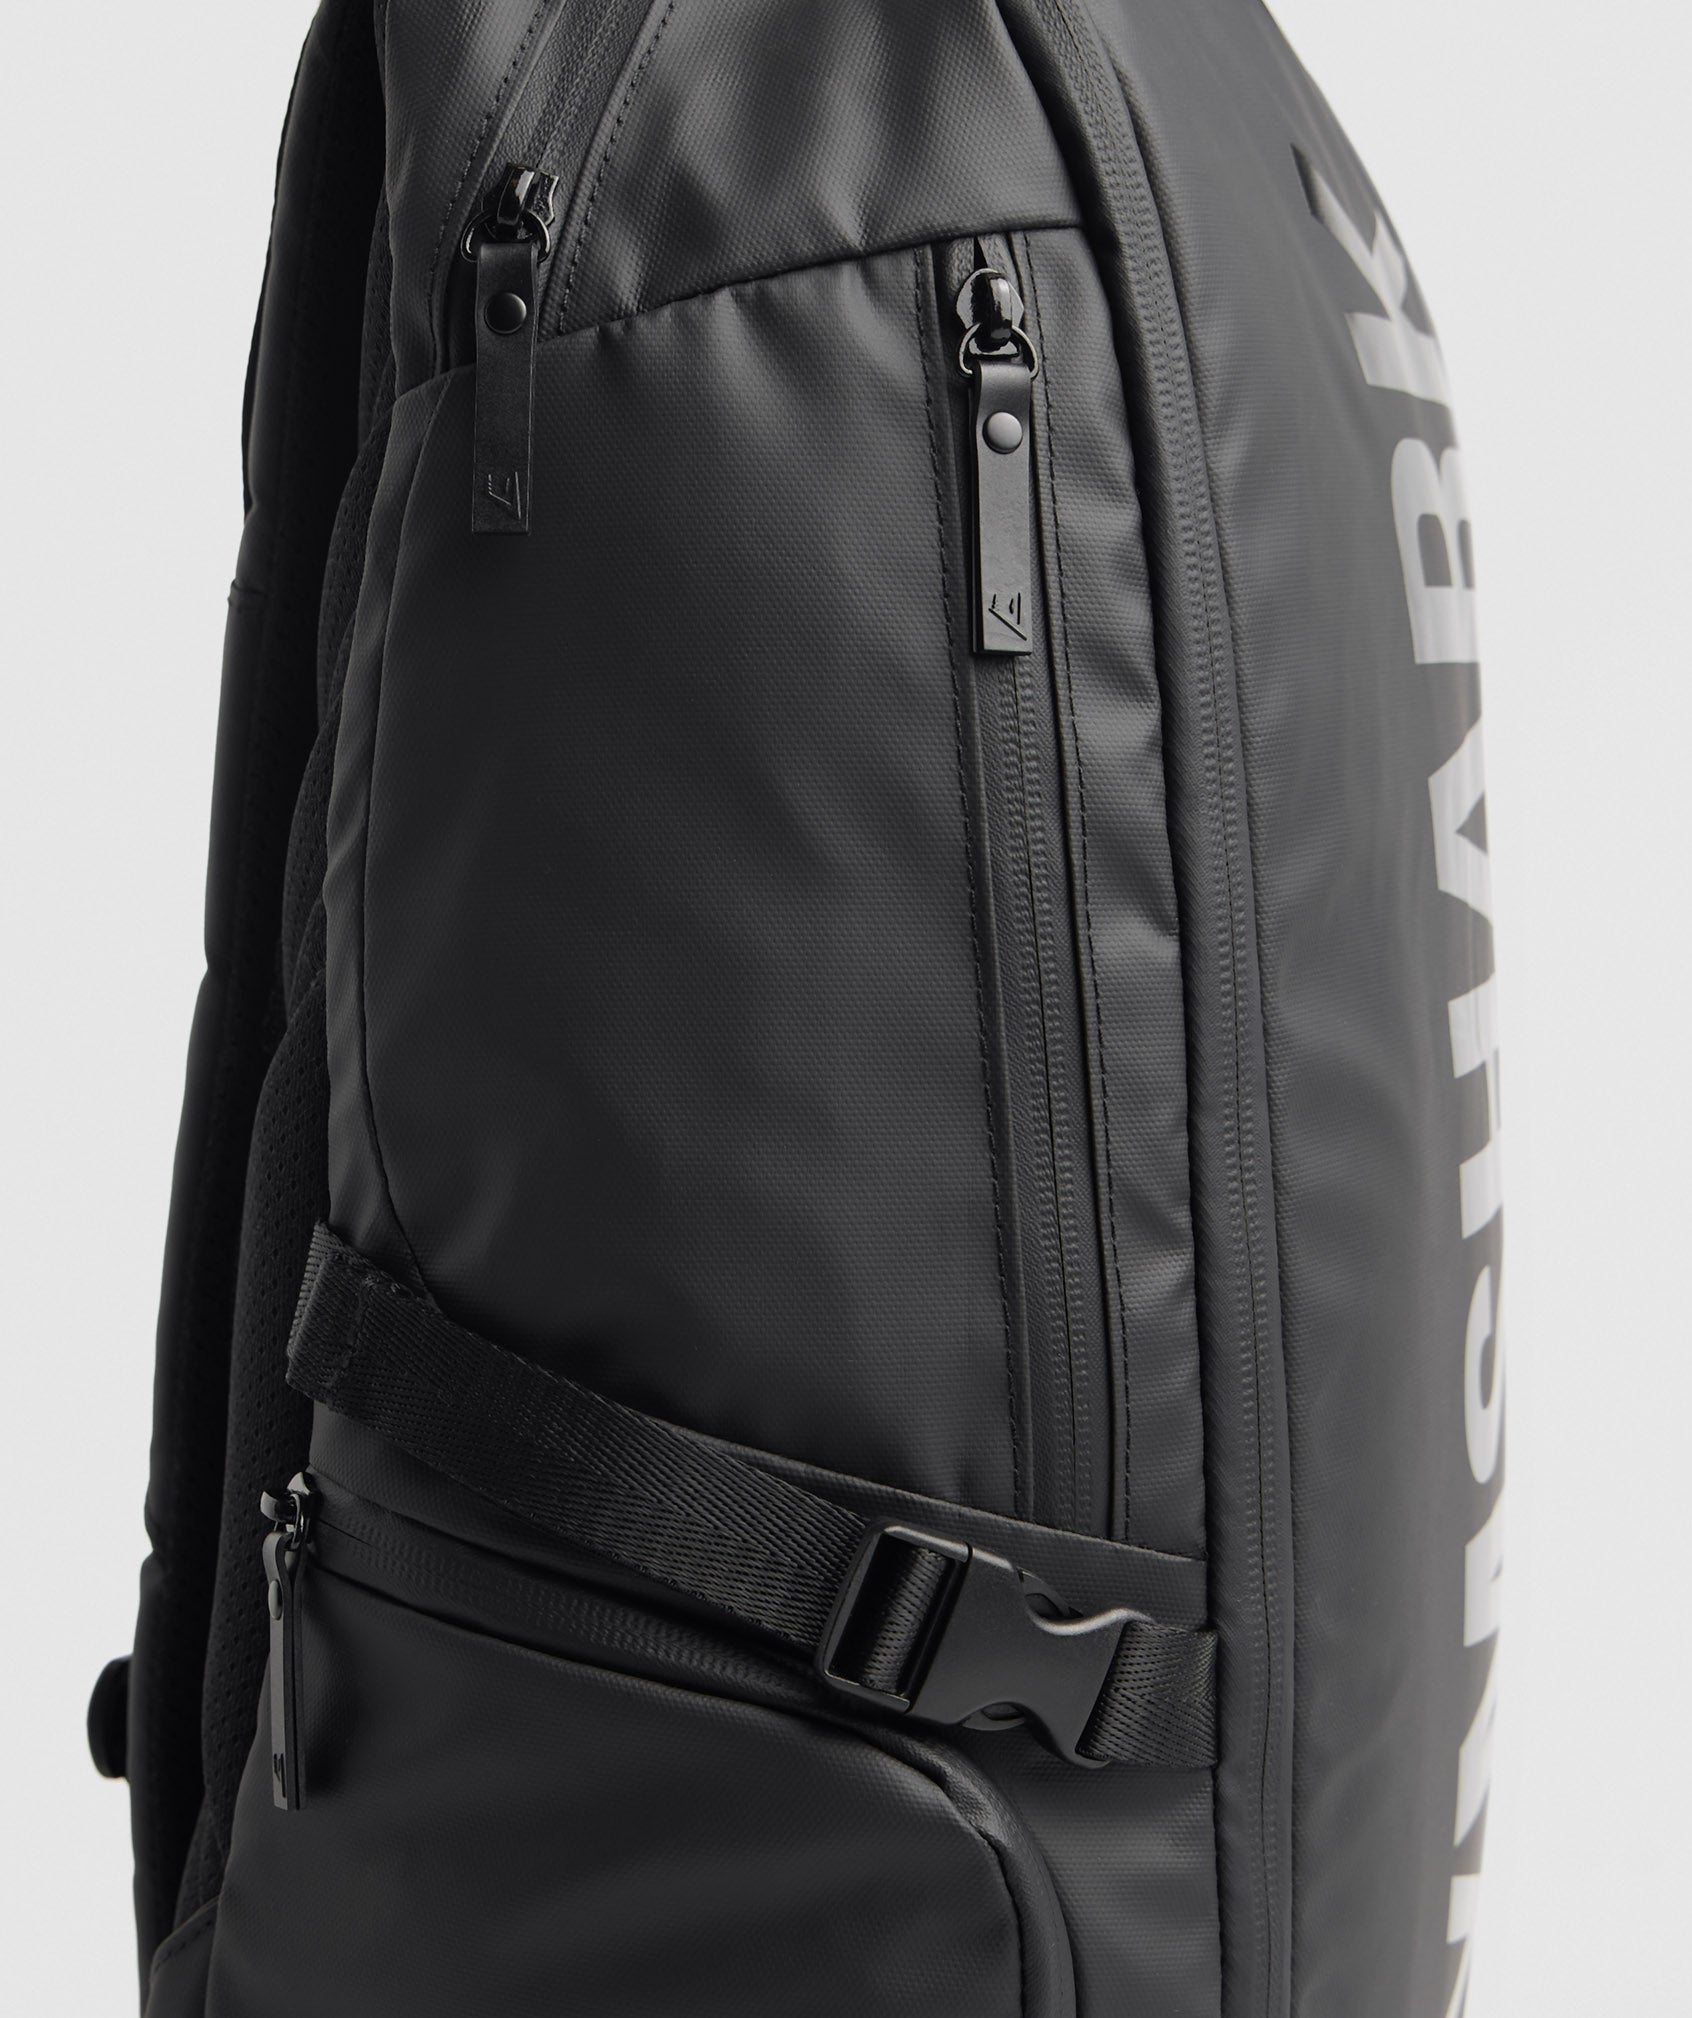 X-Series 0.3 Backpack in Black - view 8